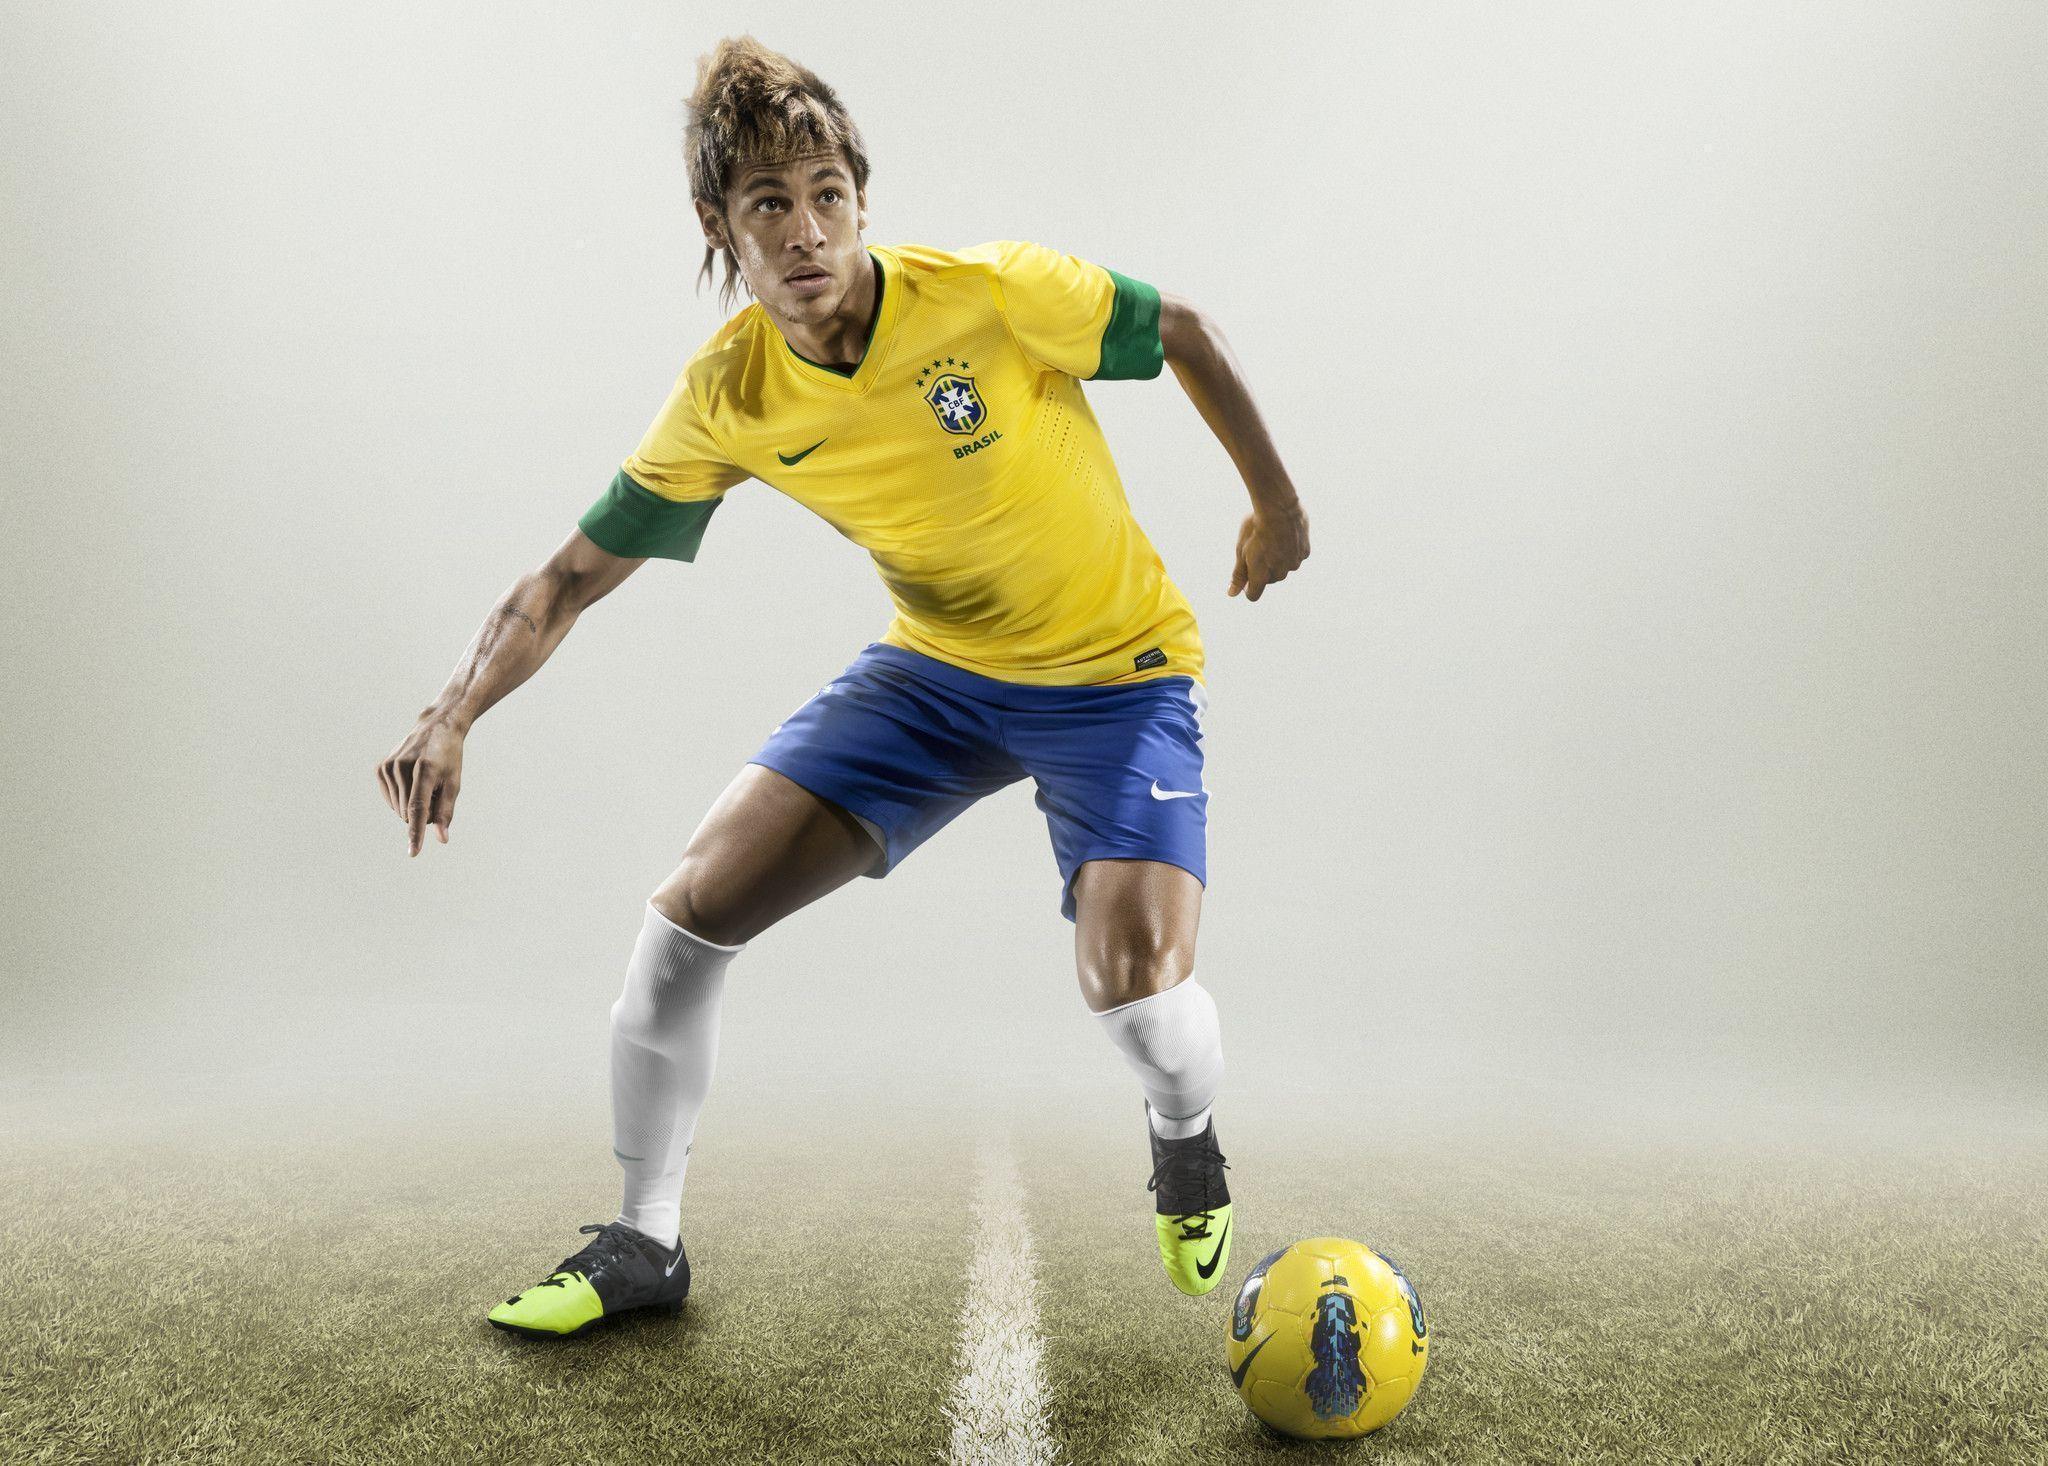 Neymar Brazil Wallpaper 2015 HD